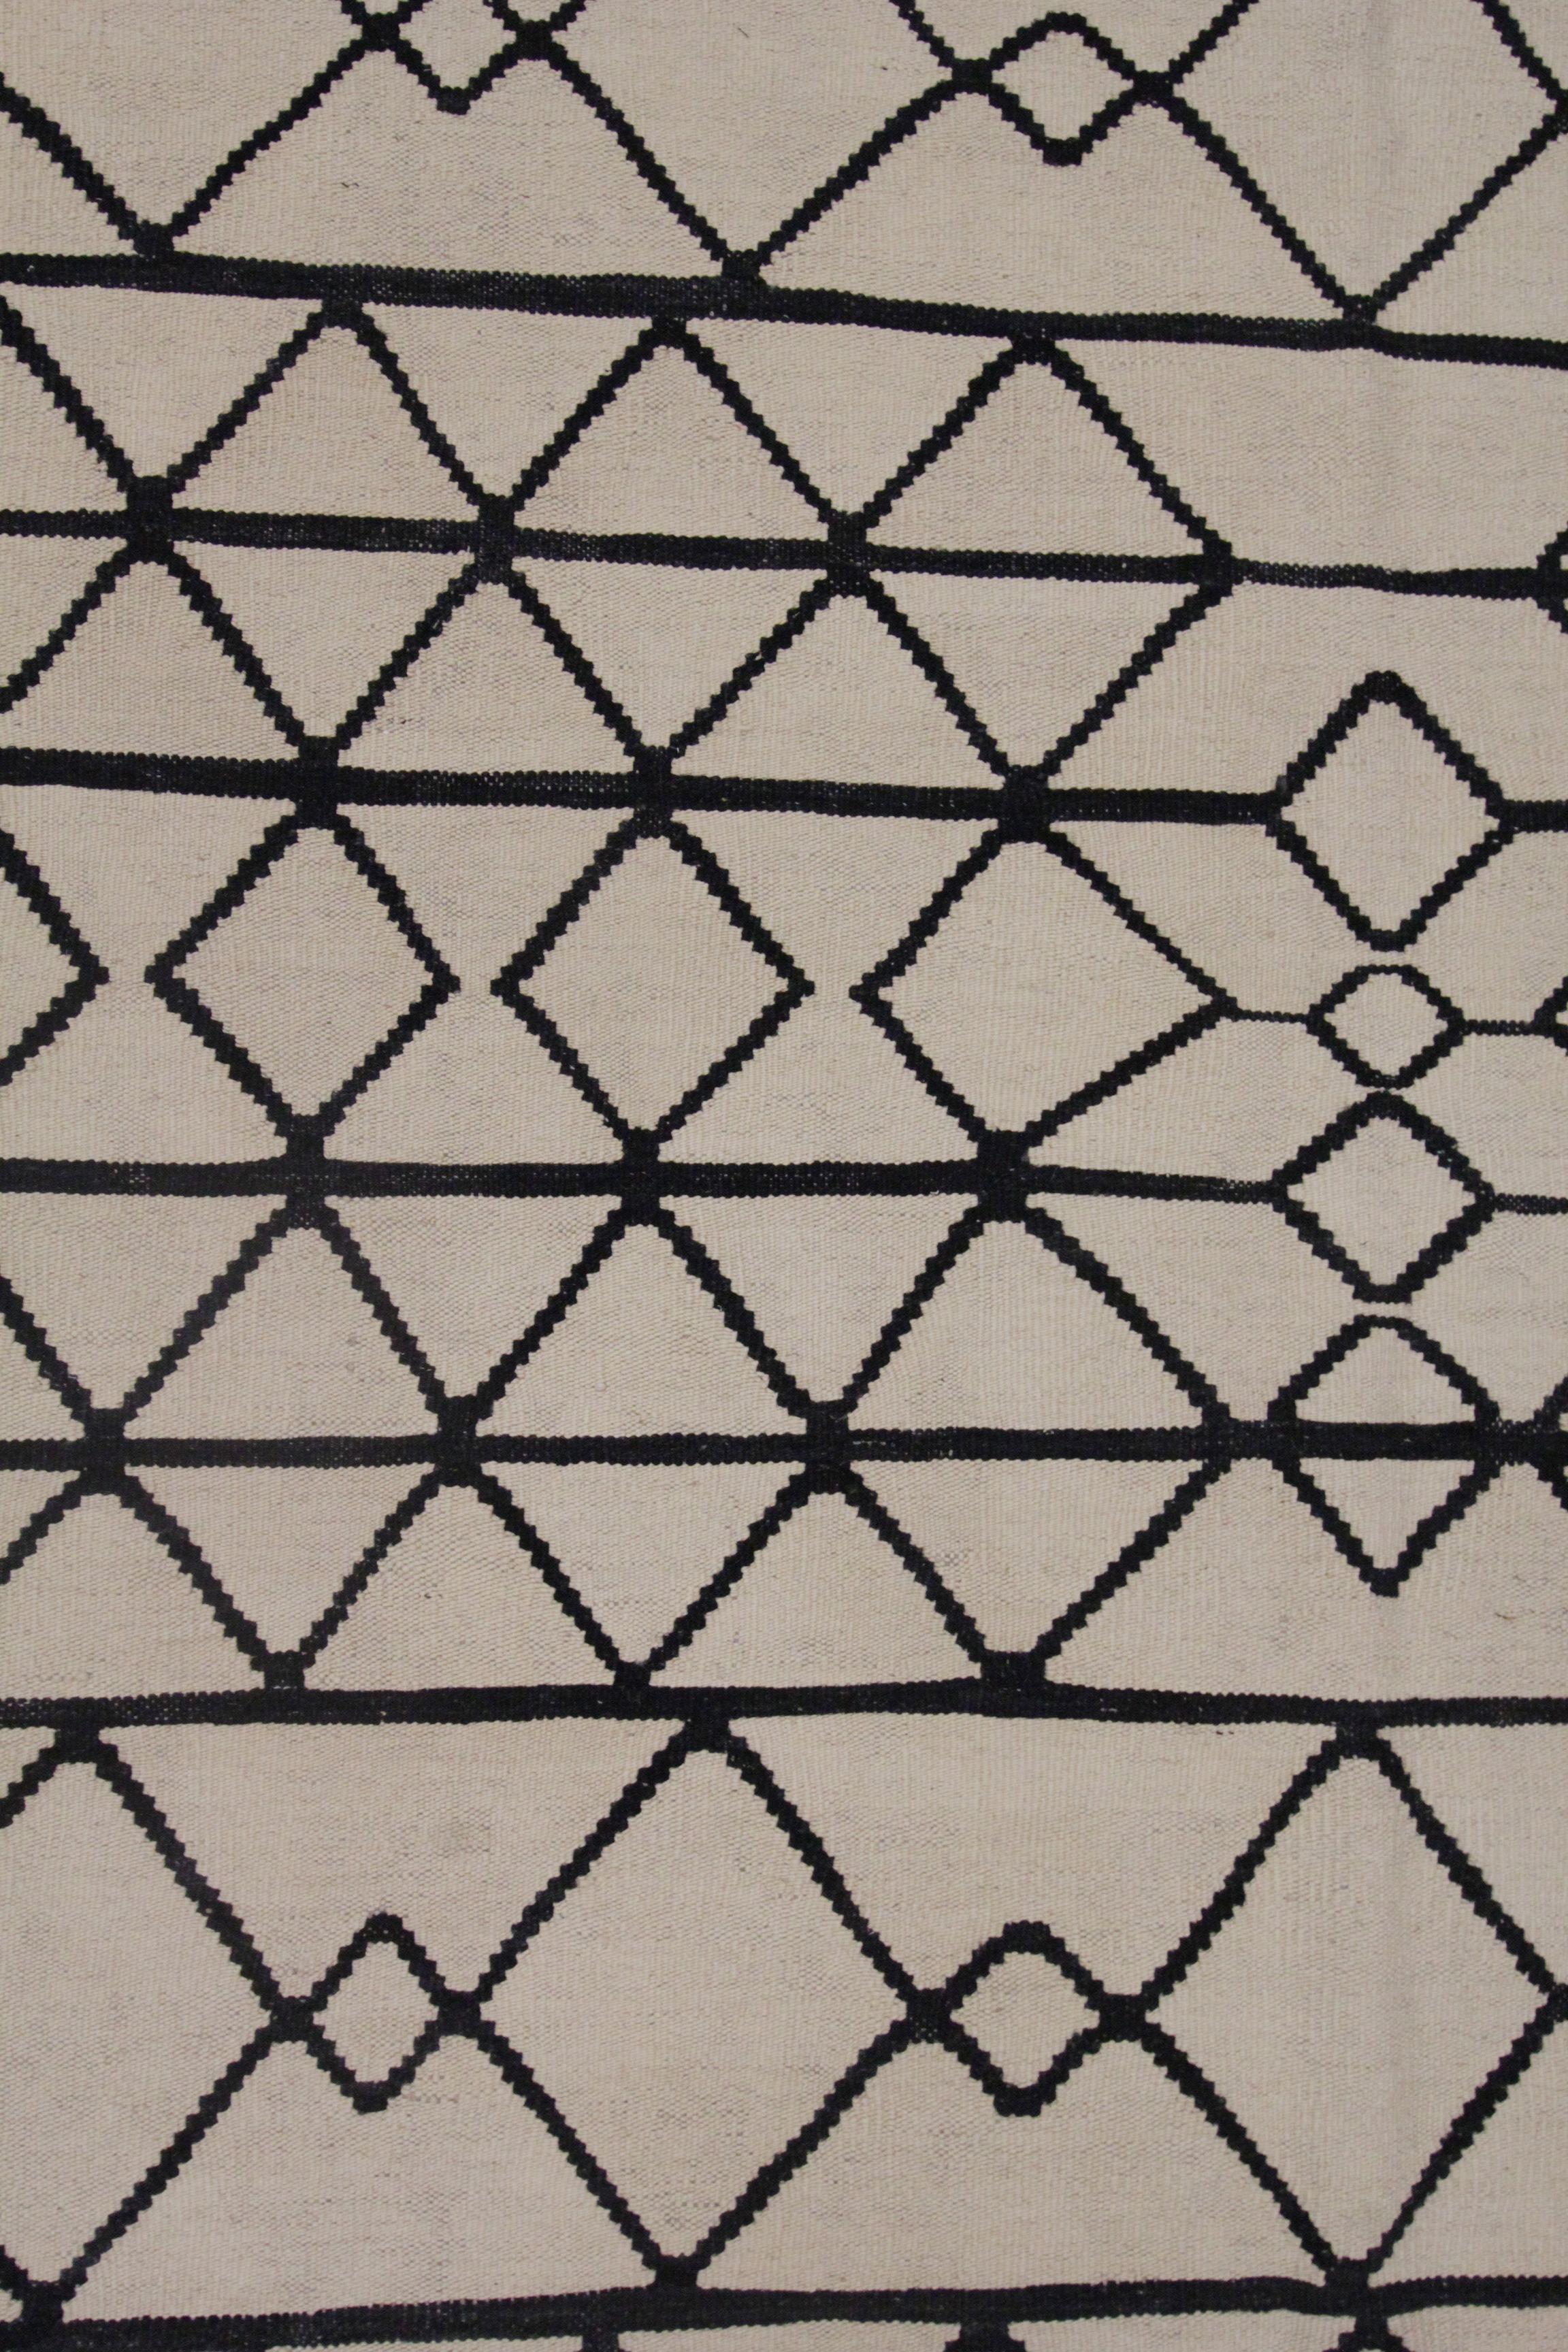 Contemporary Kilim Rugs Scandinavian Abstract Geometric Kilim Wool Modern Rugs Black/ White